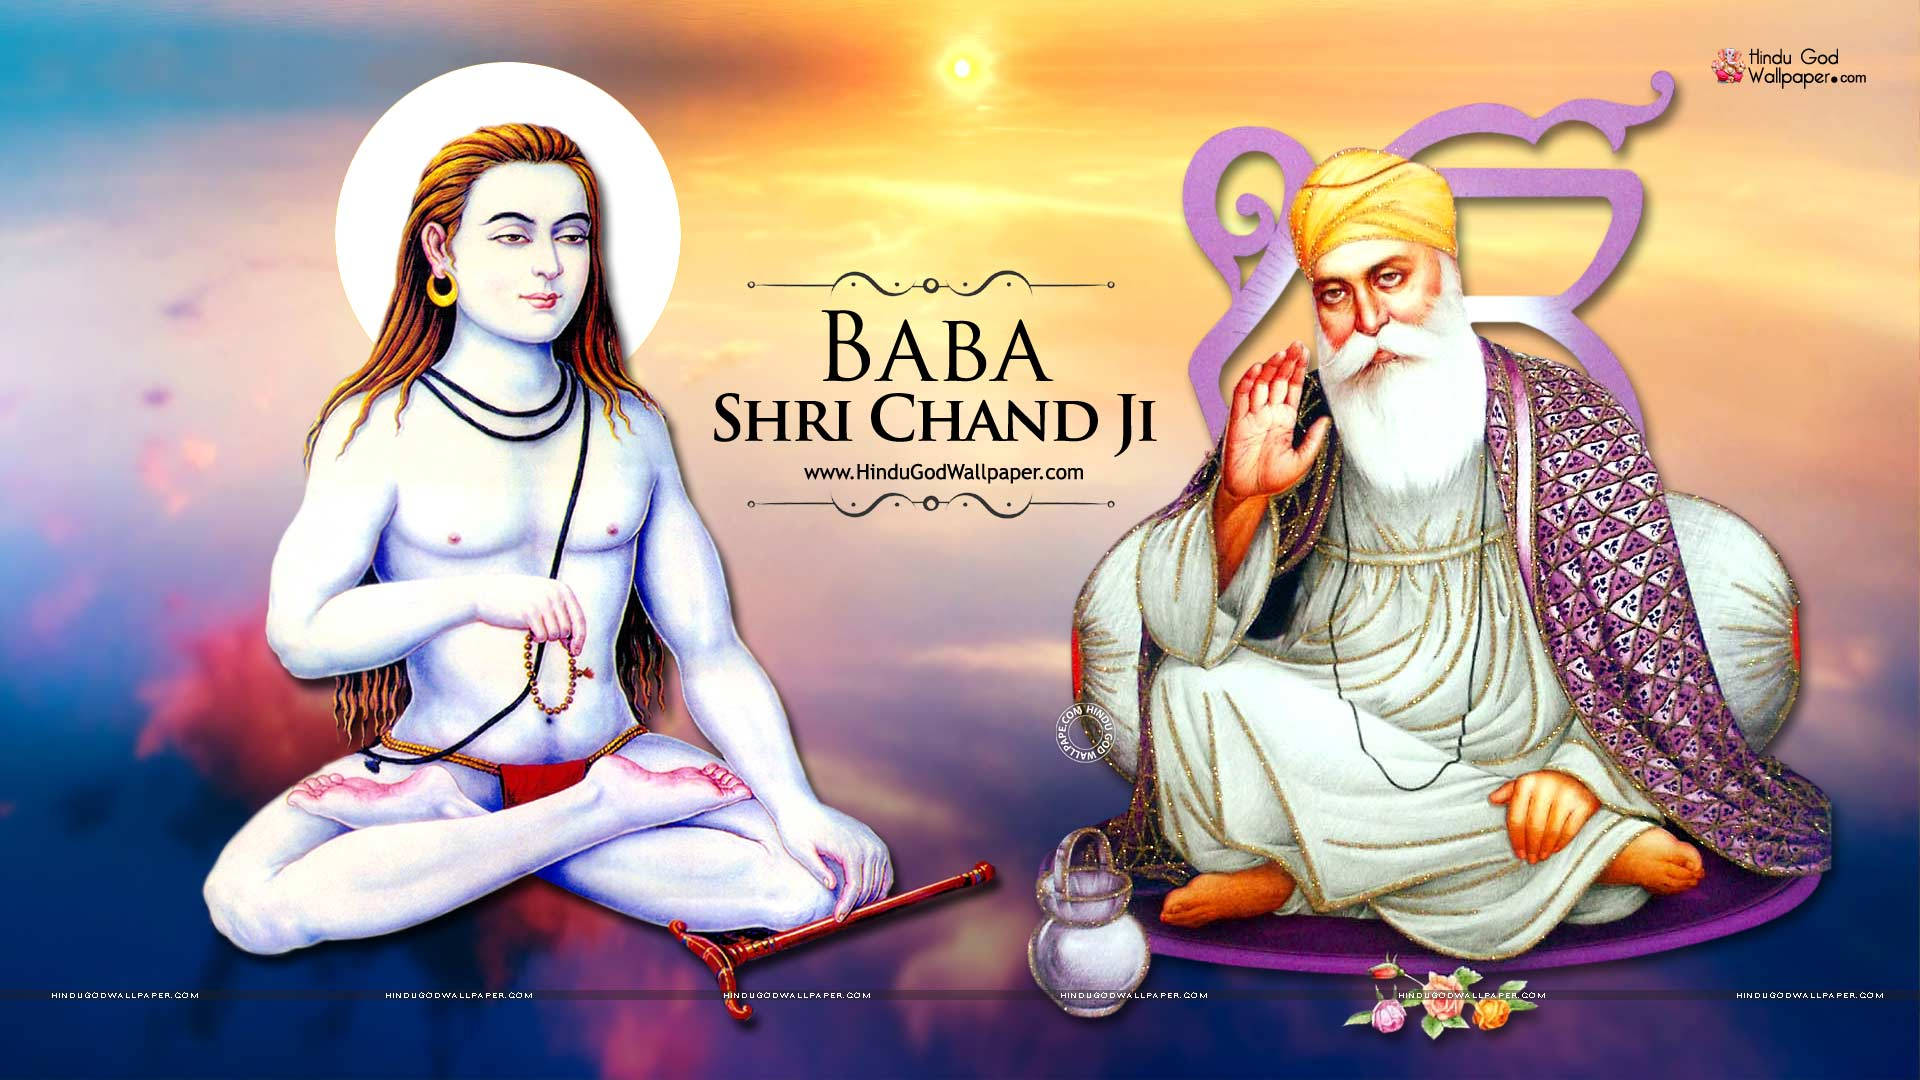 Ære være Sri Chand og Guru Ji! Wallpaper